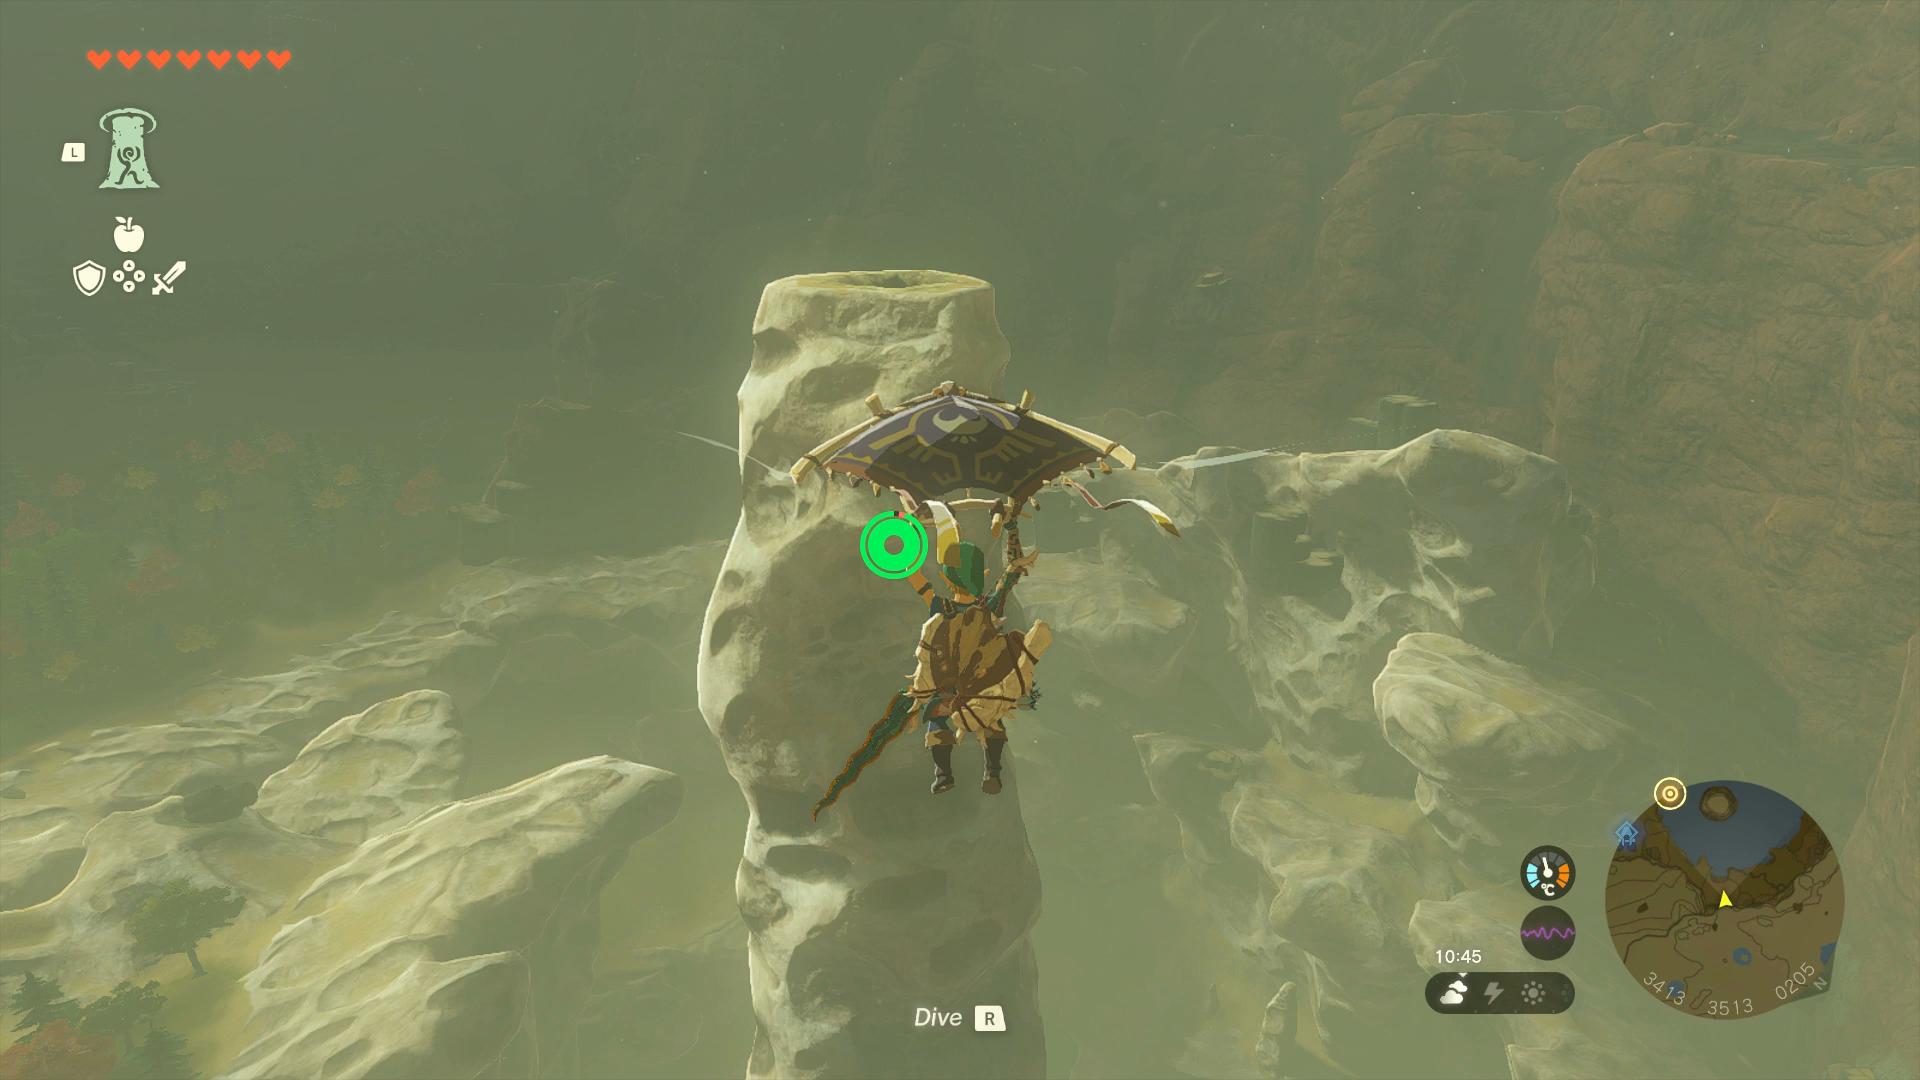 Link gliding towards the Skull